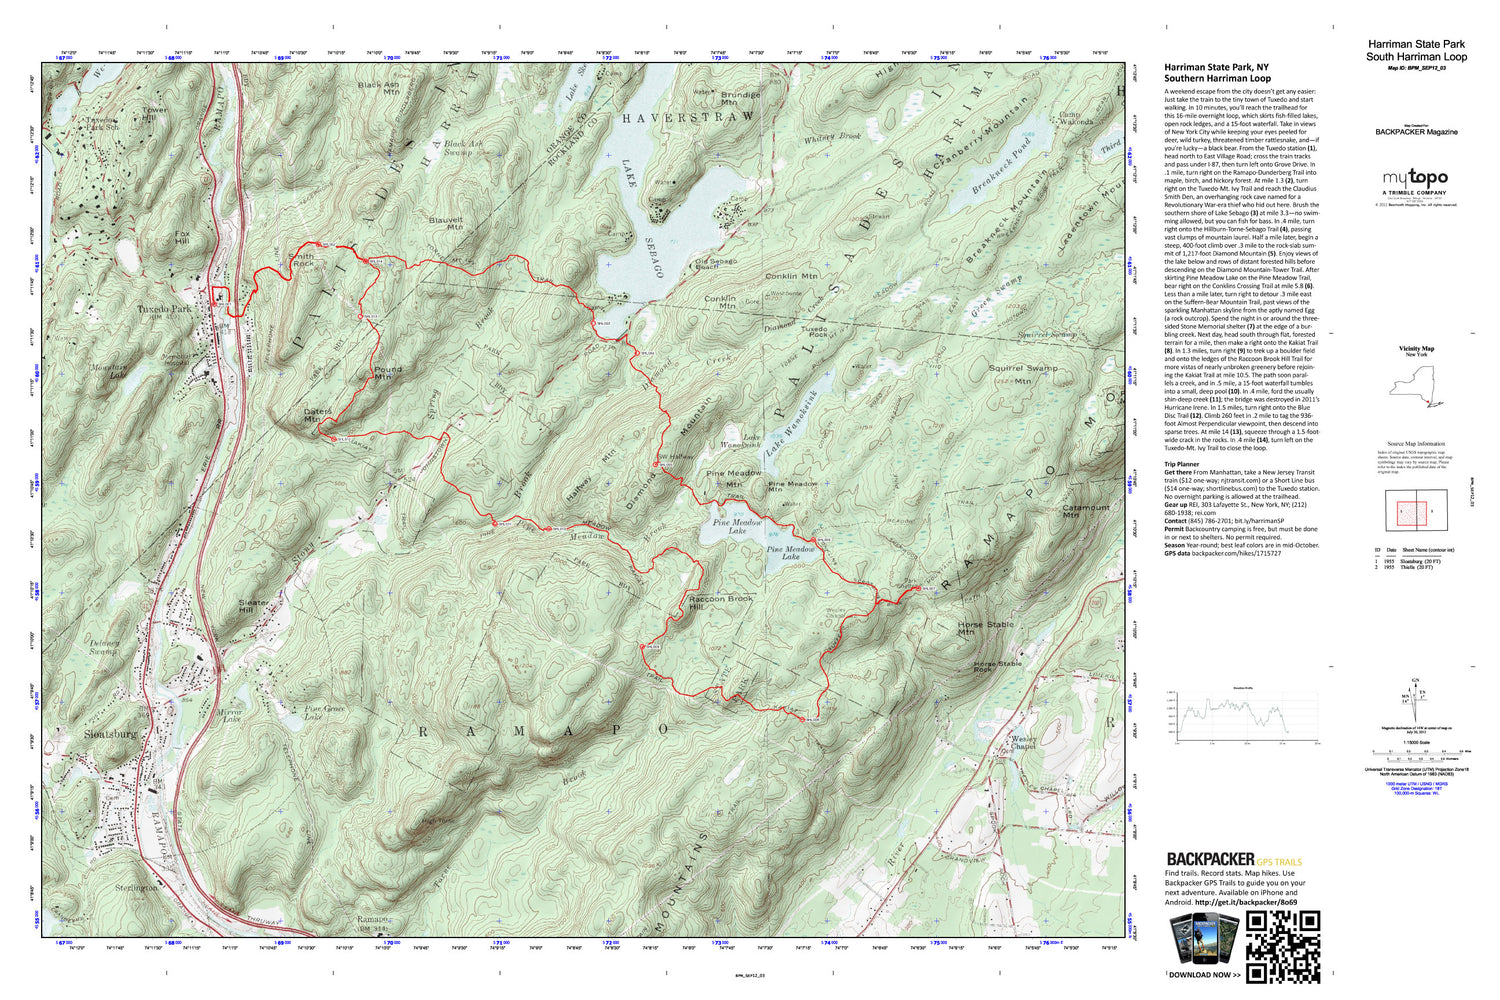 South Harriman Loop Map (Harriman State Park, New York) Image